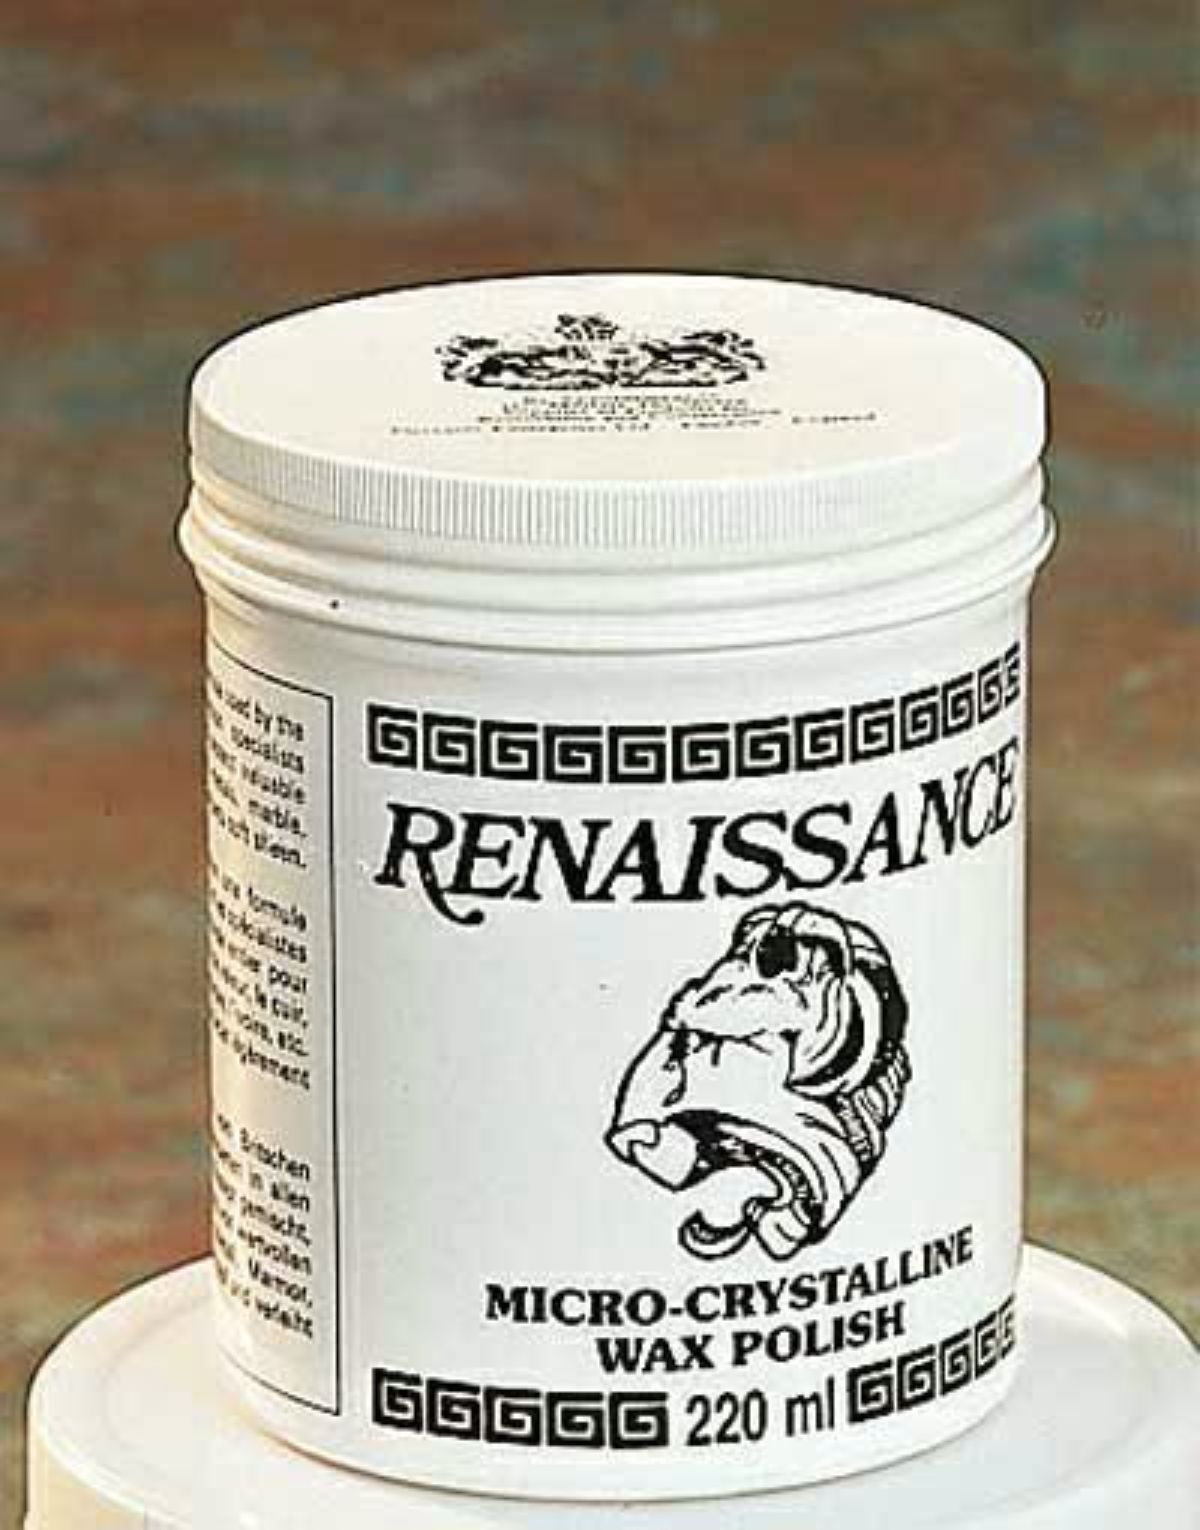 Microcrystalline Wax Polish - Renaissance